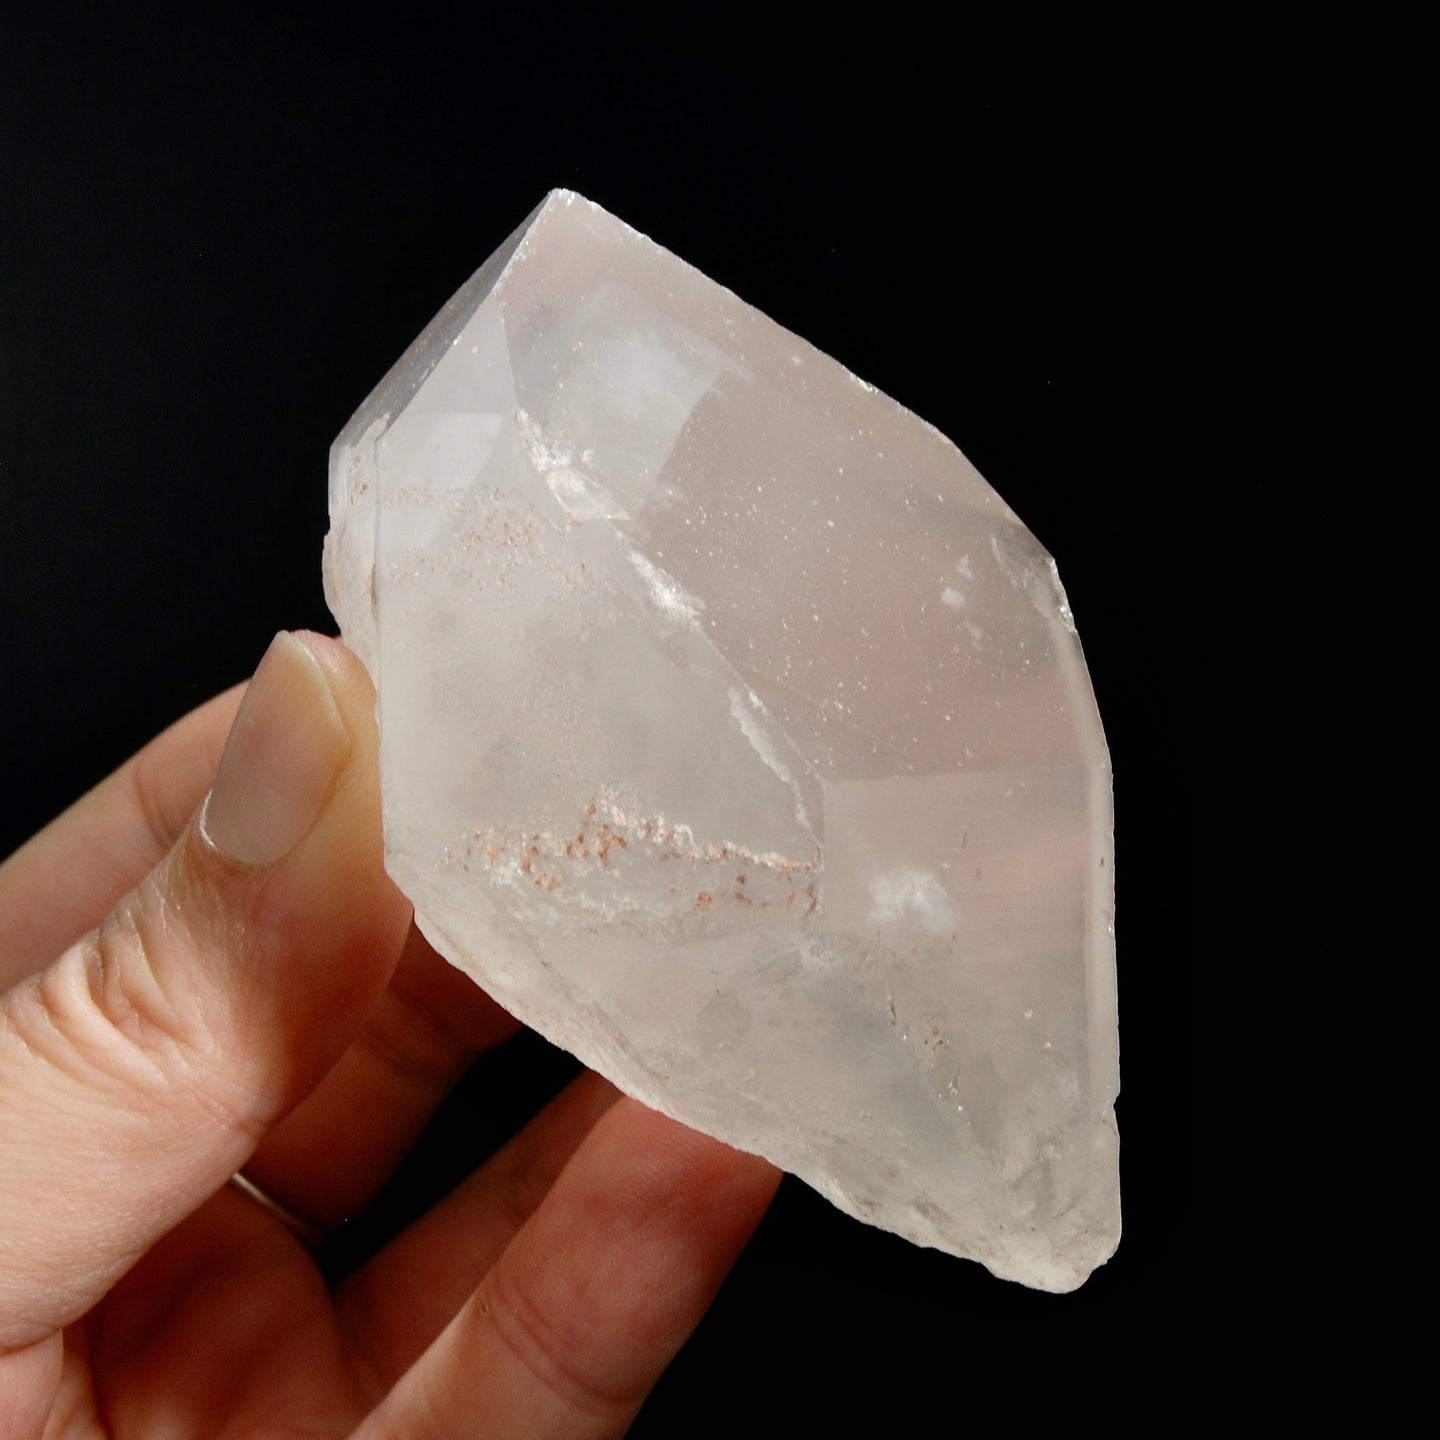 RARE Trans Channeler Pink Lithium Lemurian Seed Quartz Crystal, Record Keepers Phantom Pyramid, Brazil